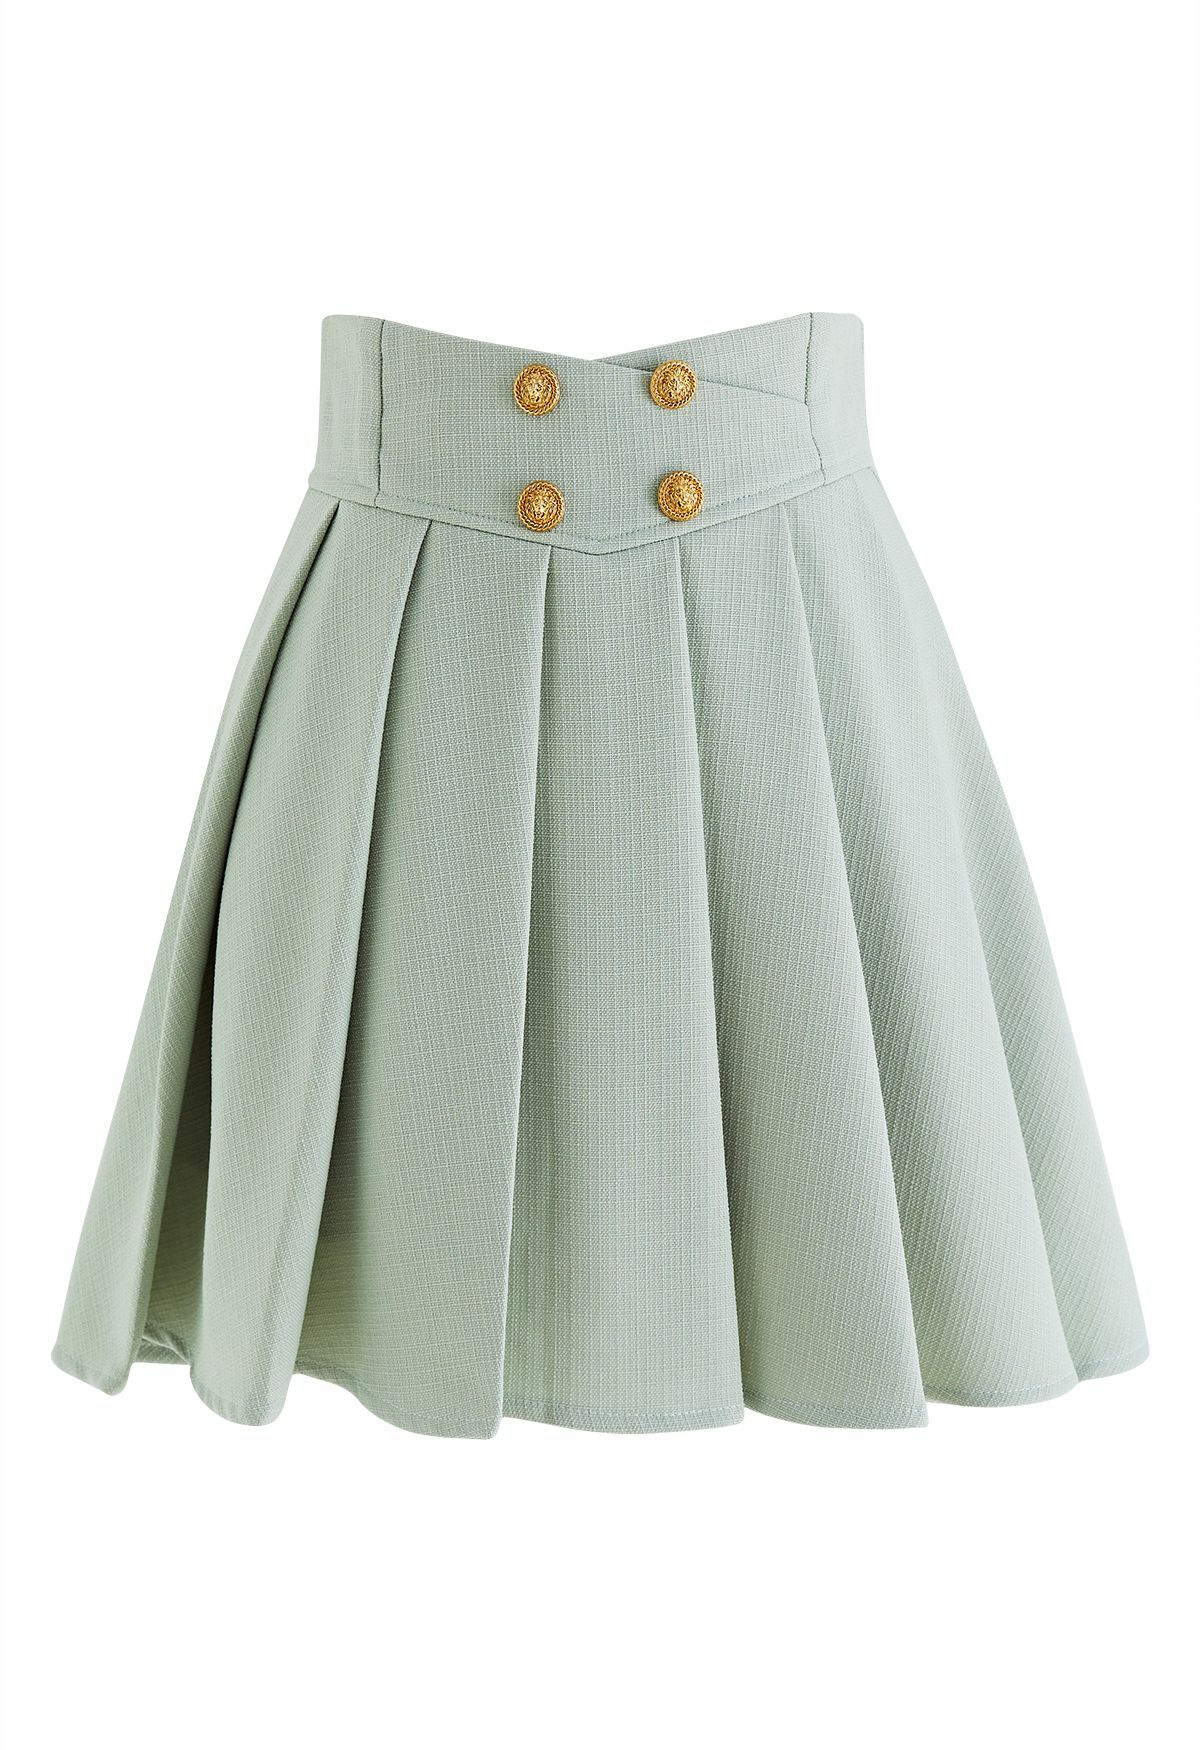 Golden Button Pleated Flare Mini Skirt in Pistachio | Chicwish